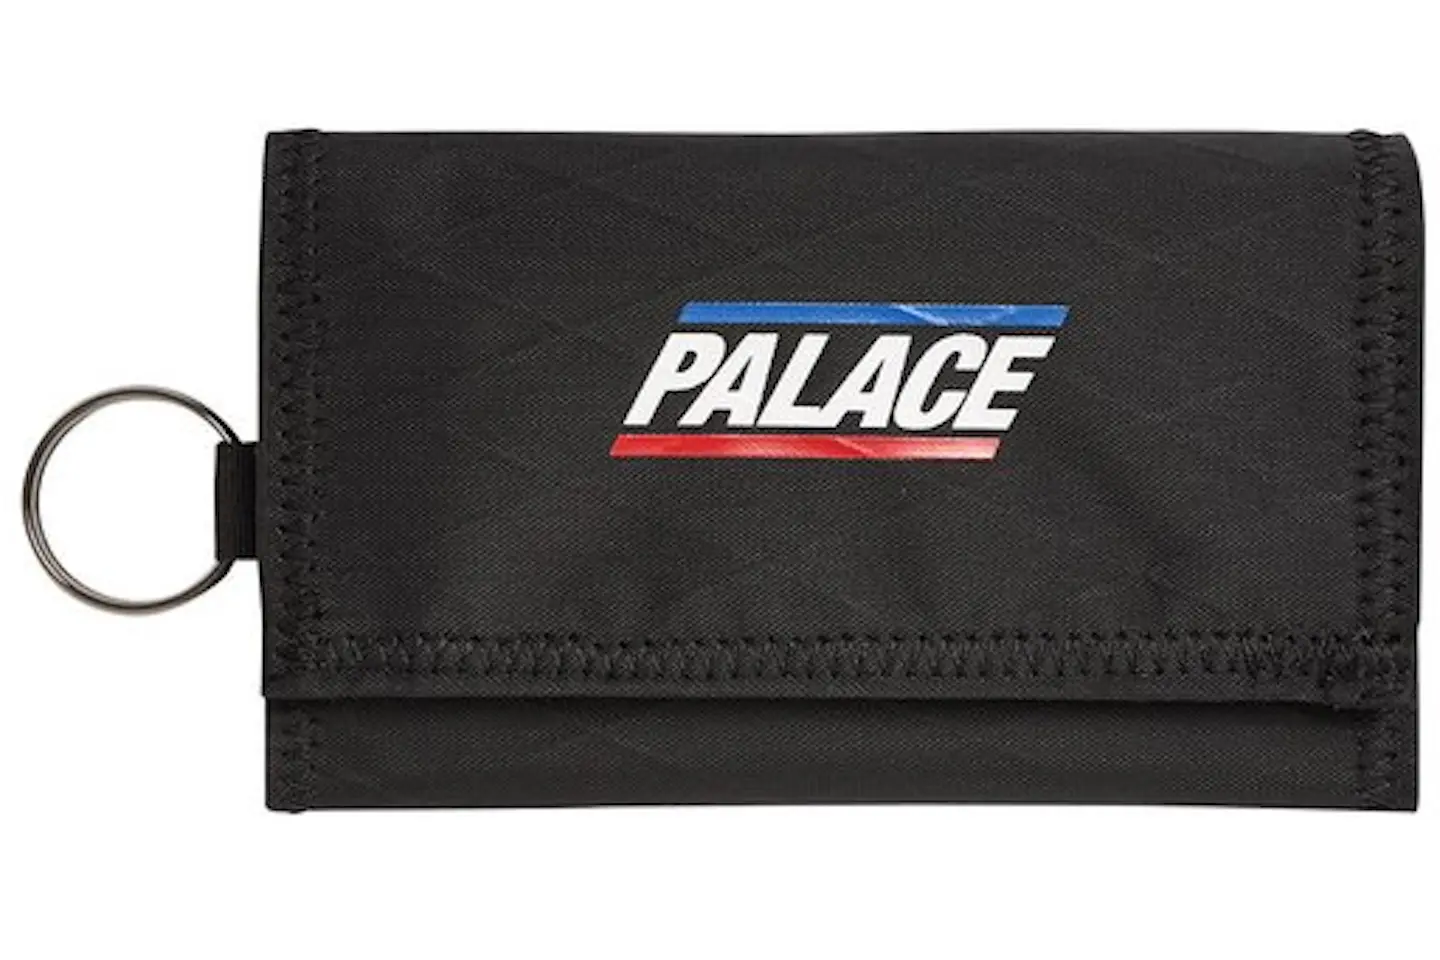 Palace Dimension Tri Wallet Black - SS20 - CN